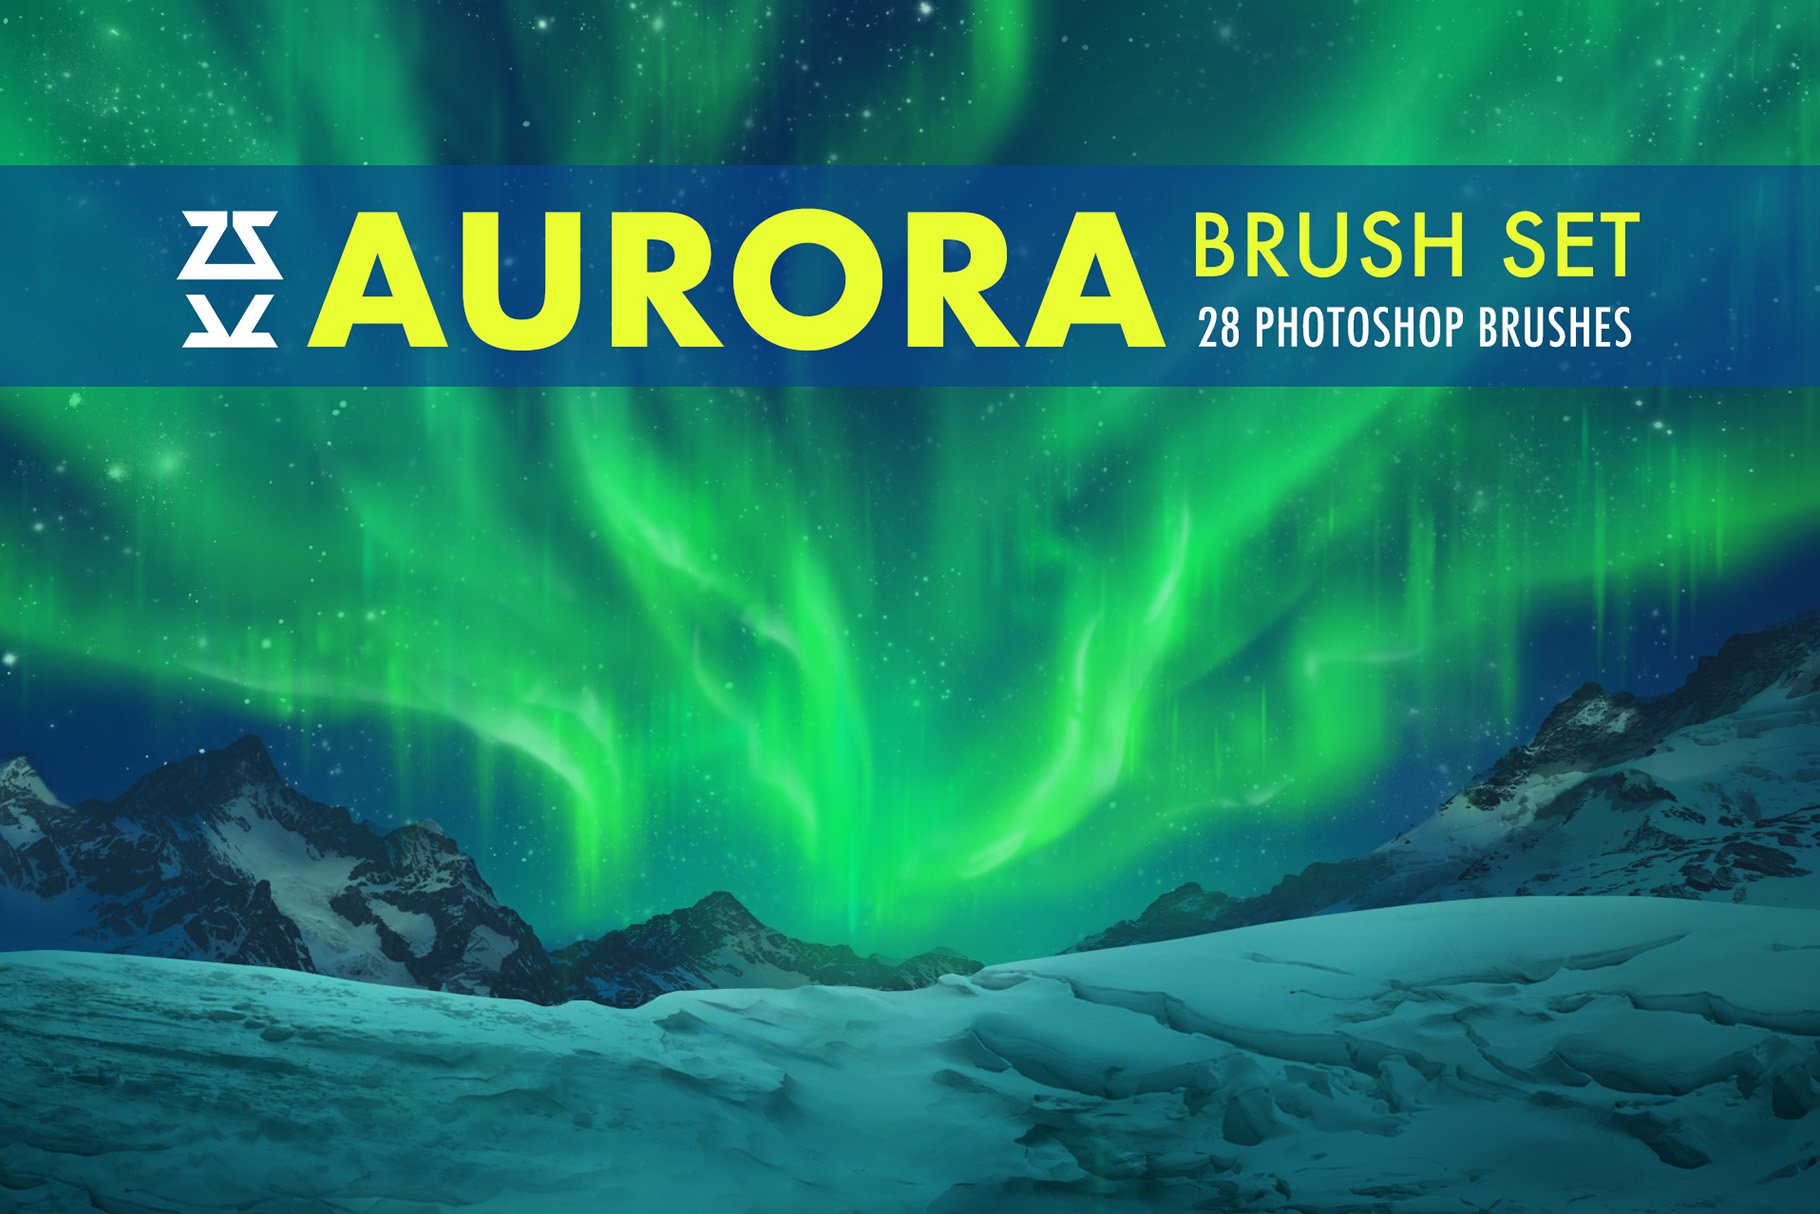 Aurora Brush Setcover image.